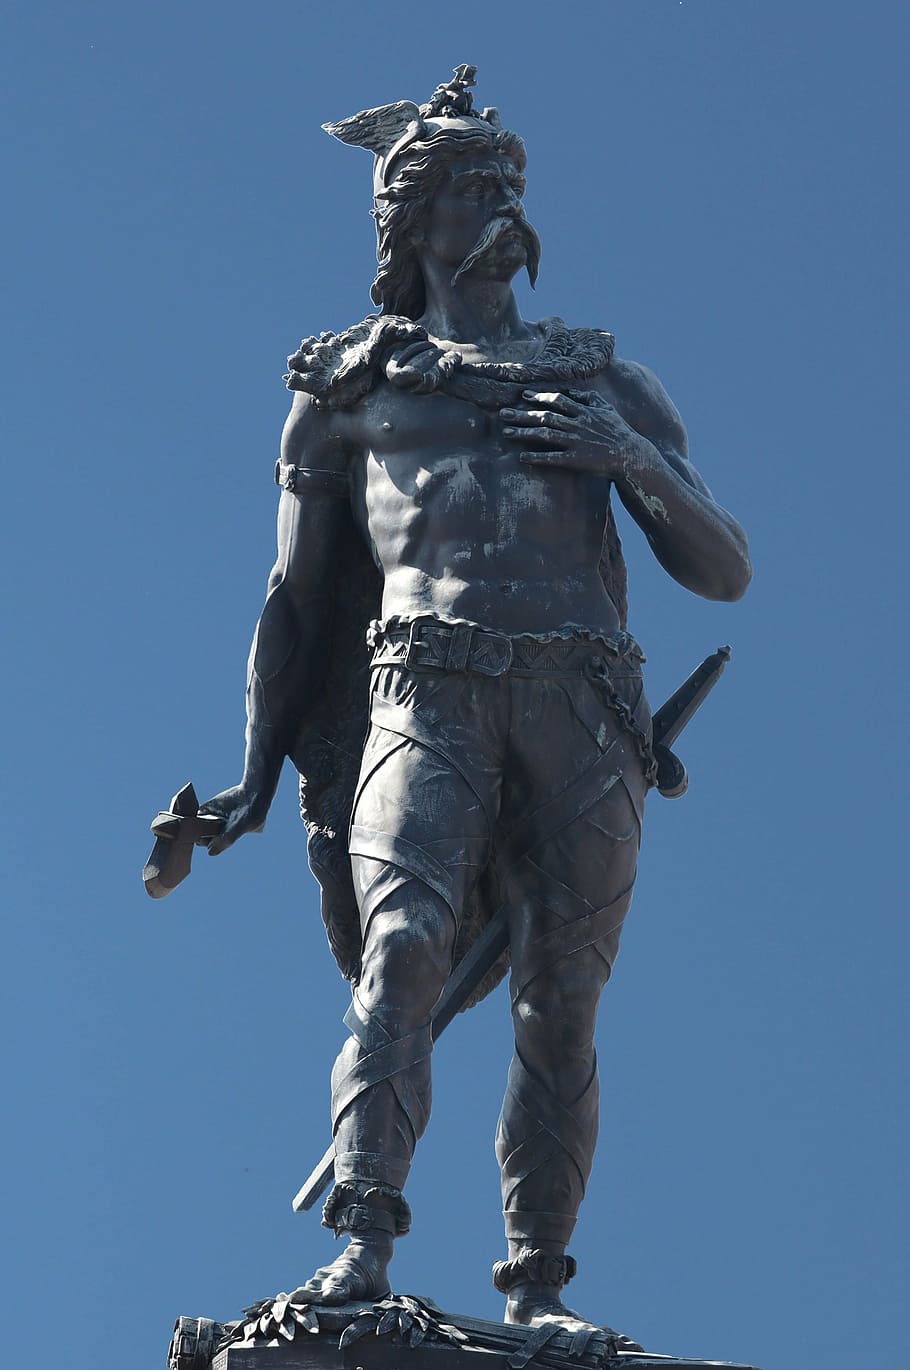 ambiorix, statue, tongeren, ケルト王, エブロネン, リーダー, 戦士, フィールドヘル, ローマ人に対するリーダー, ベルギー